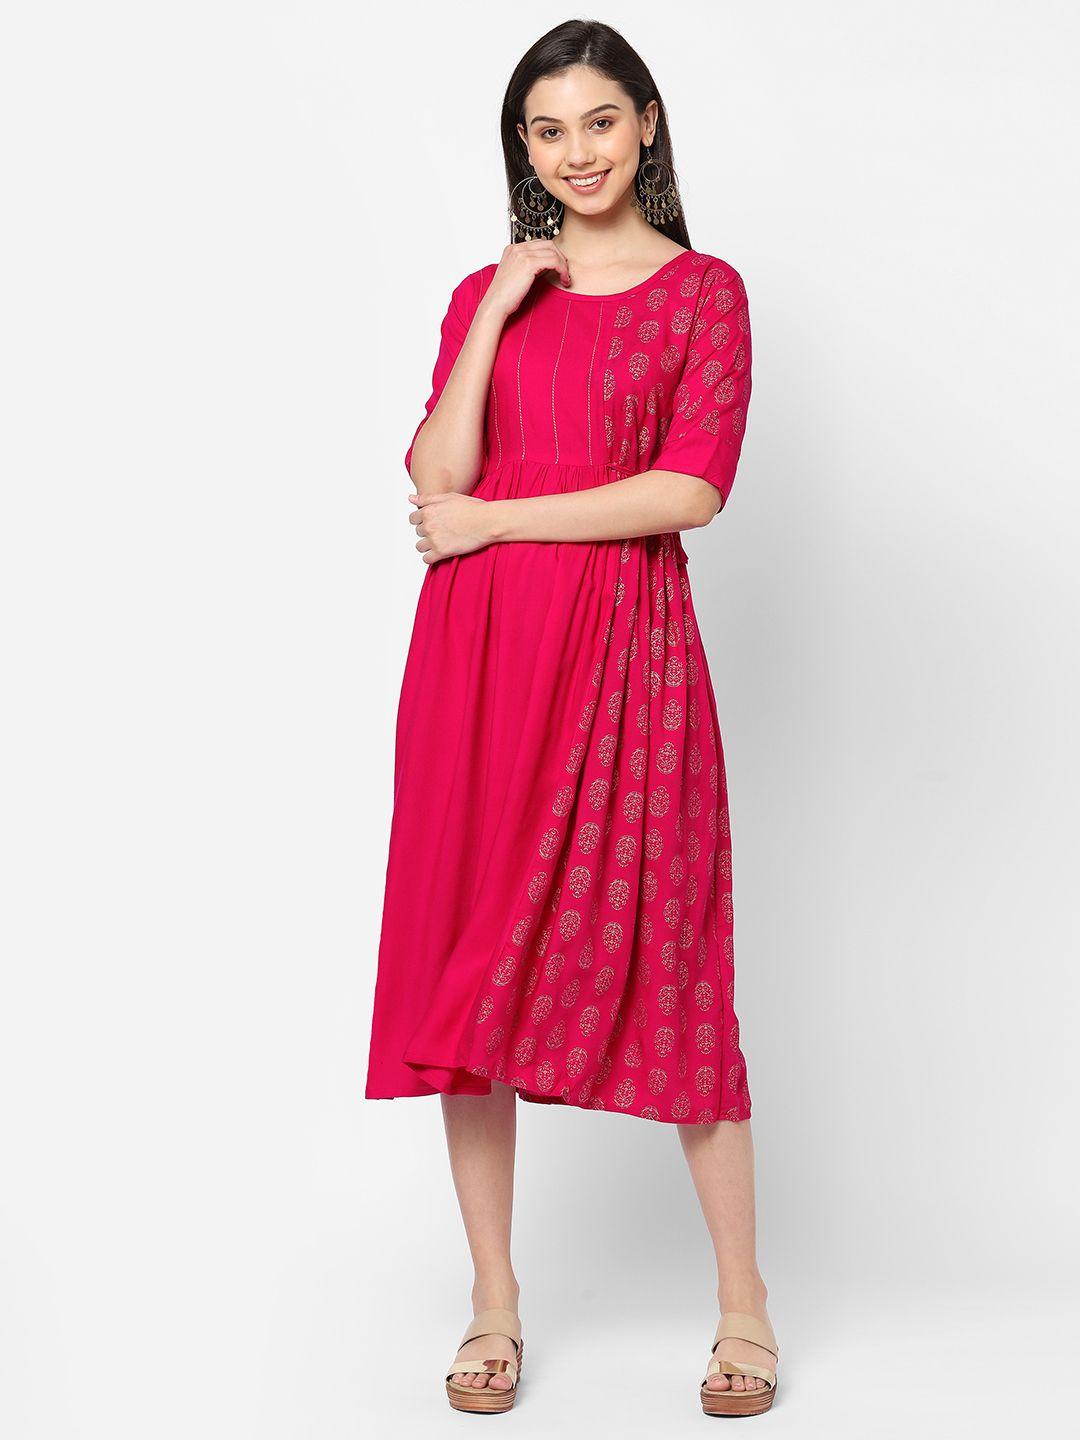 redround pink ethnic motifs ethnic midi dress